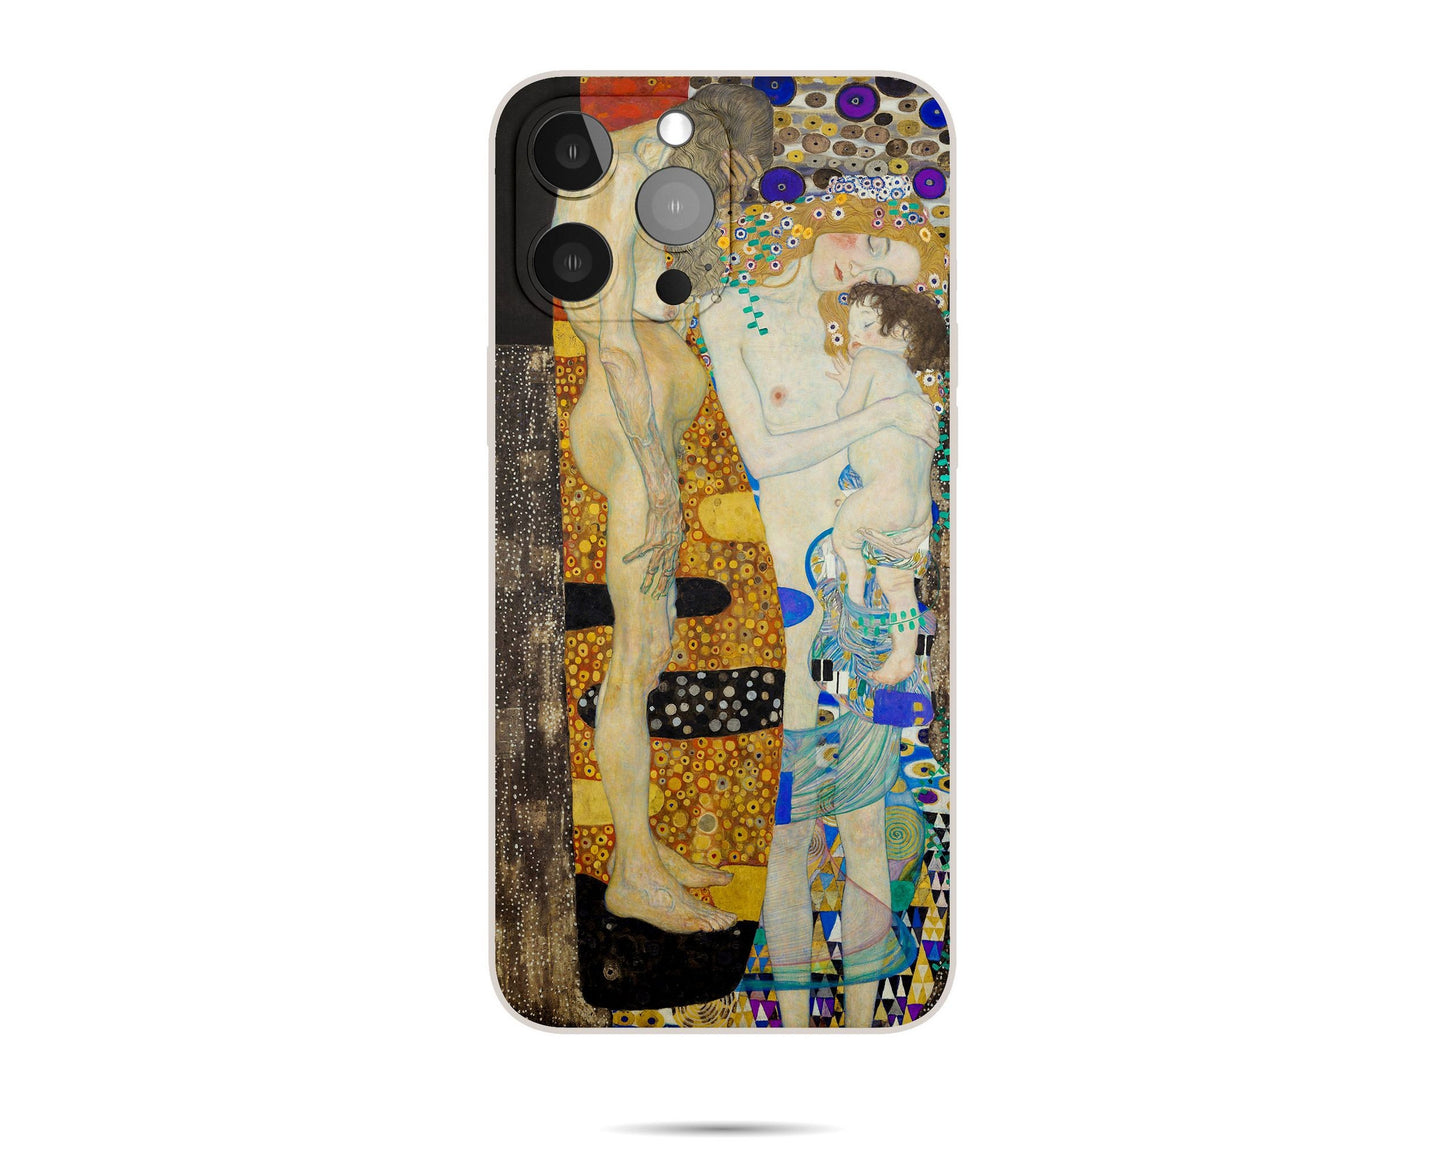 Iphone Case Of Gustav Klimt Painting The Three Ages, Iphone 8 Plus Case, Designer Iphone Case, Protective Case, Iphone Case Silicone